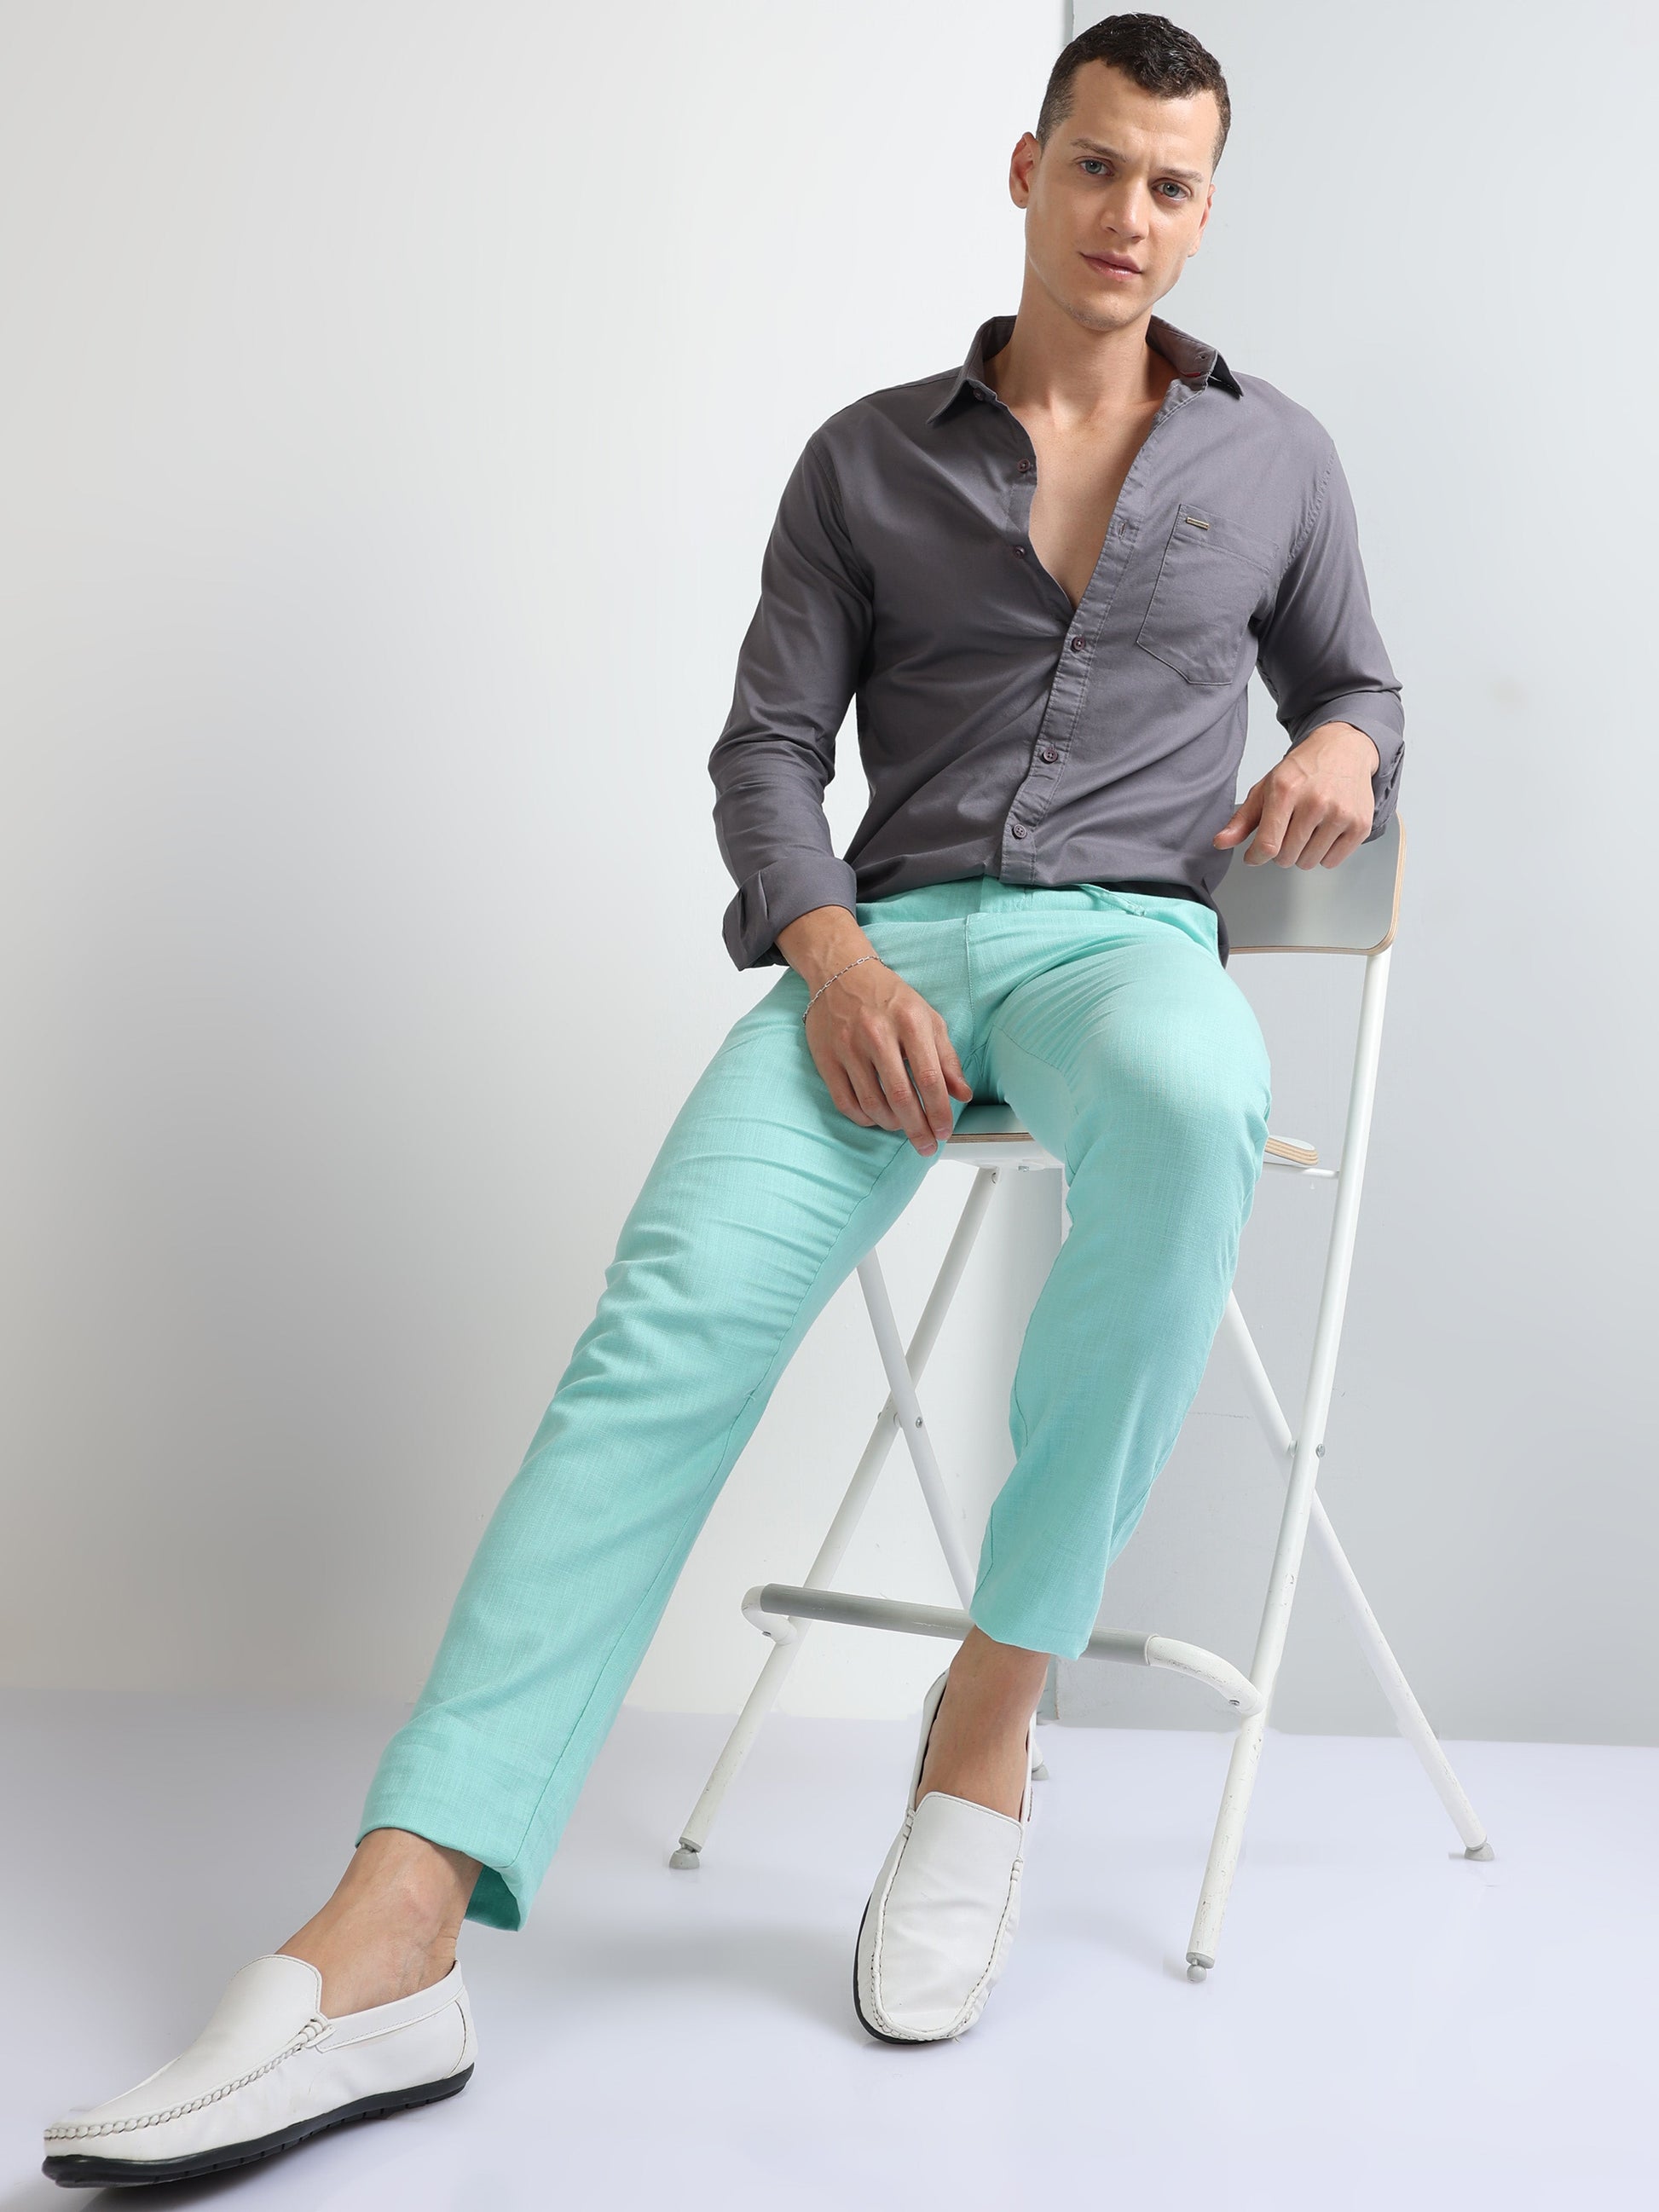 Mint Men's Drawcod Linen Fashion Pant